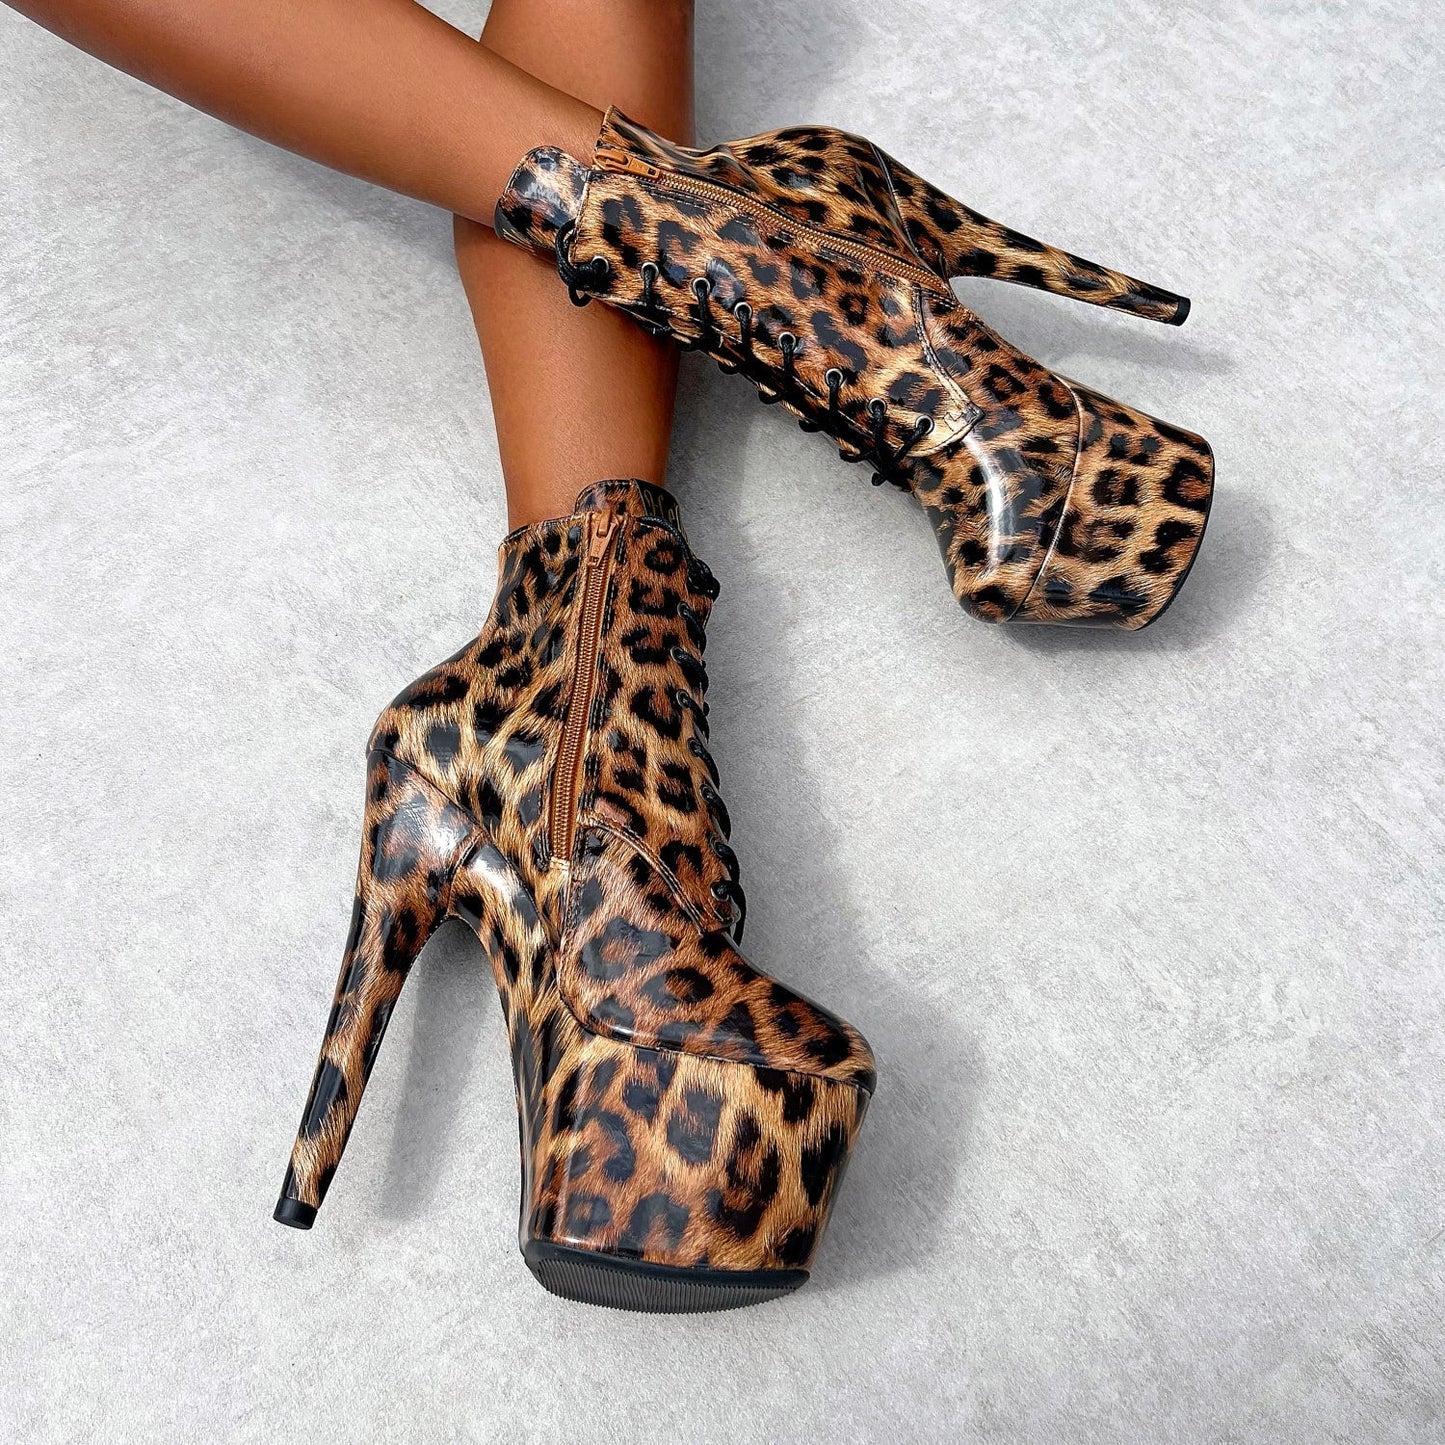 Leopard Ankle Boot - 7 INCH, stripper shoe, stripper heel, pole heel, not a pleaser, platform, dancer, pole dance, floor work